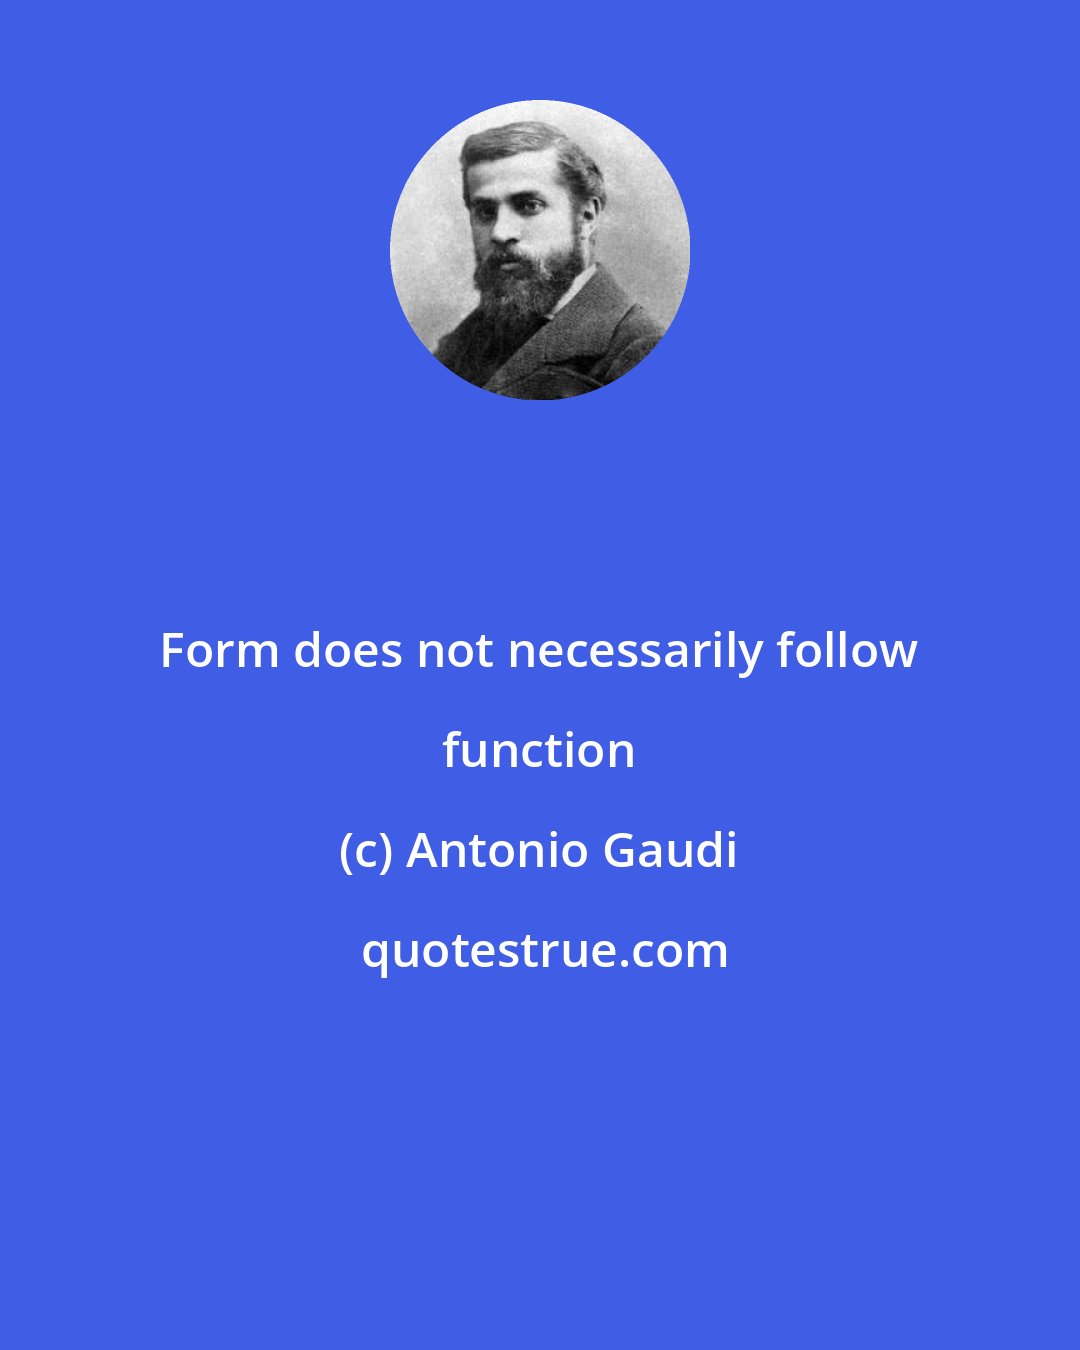 Antonio Gaudi: Form does not necessarily follow function